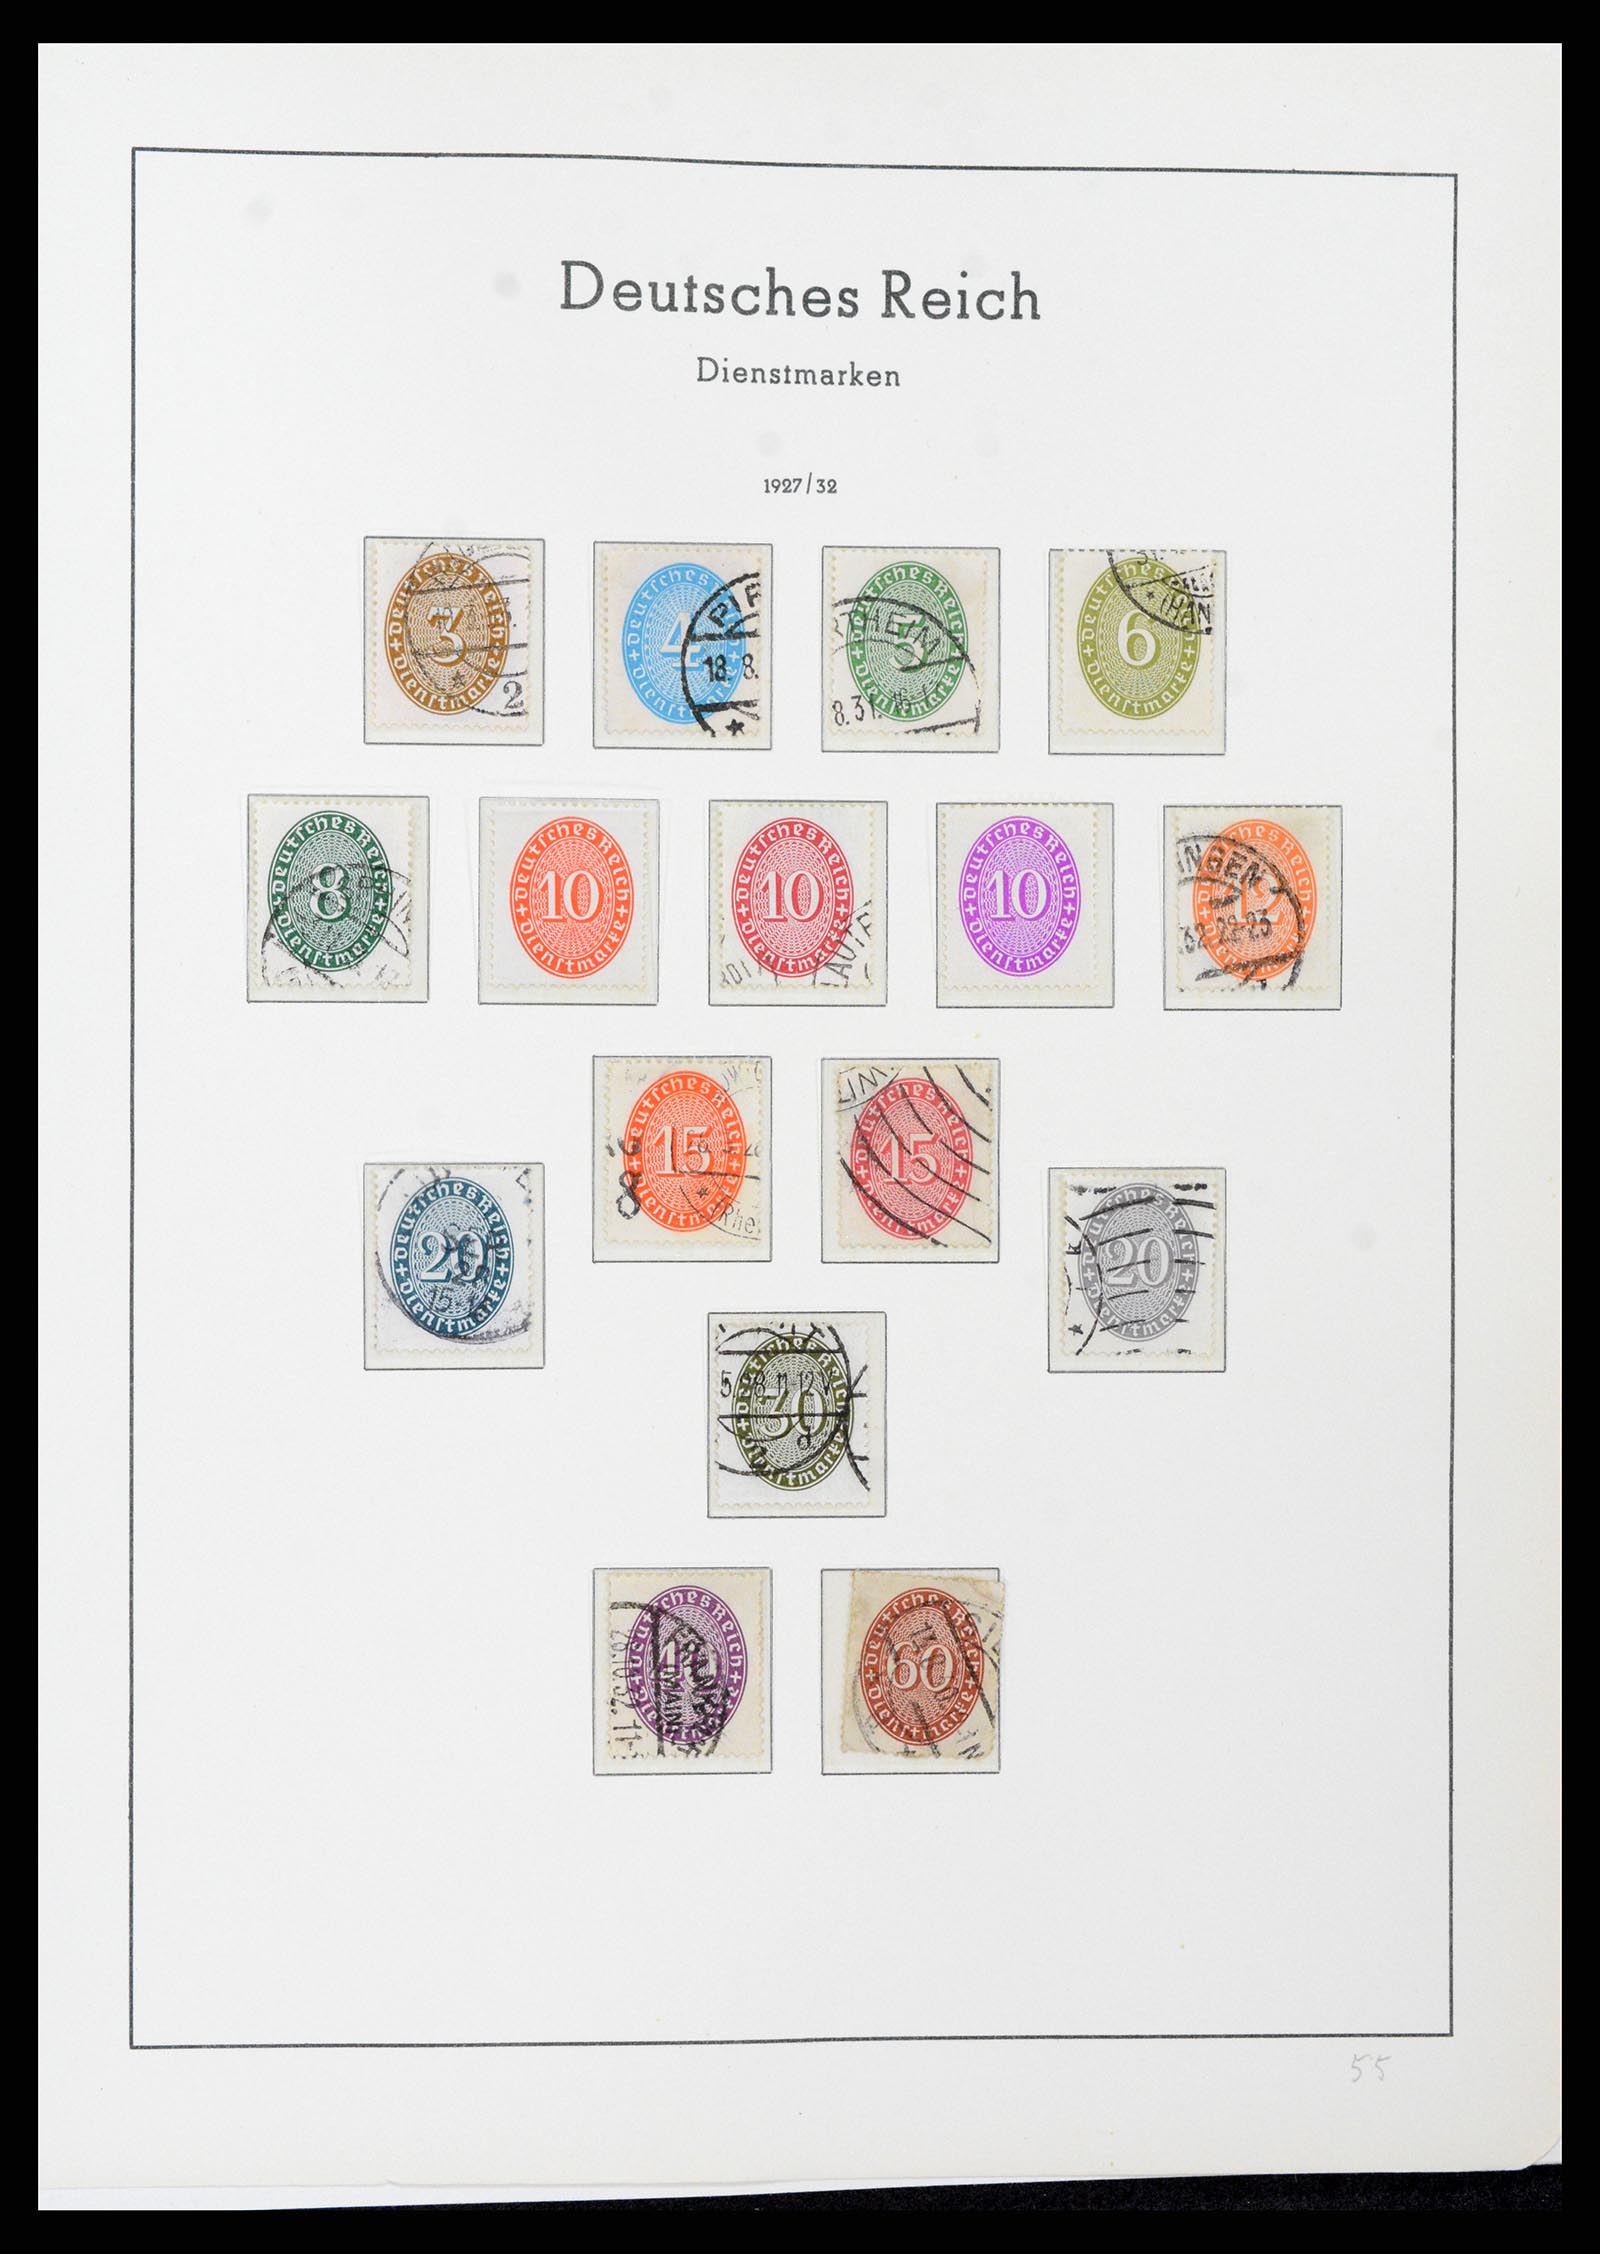 37589 055 - Stamp collection 37589 German Reich 1872-1945.